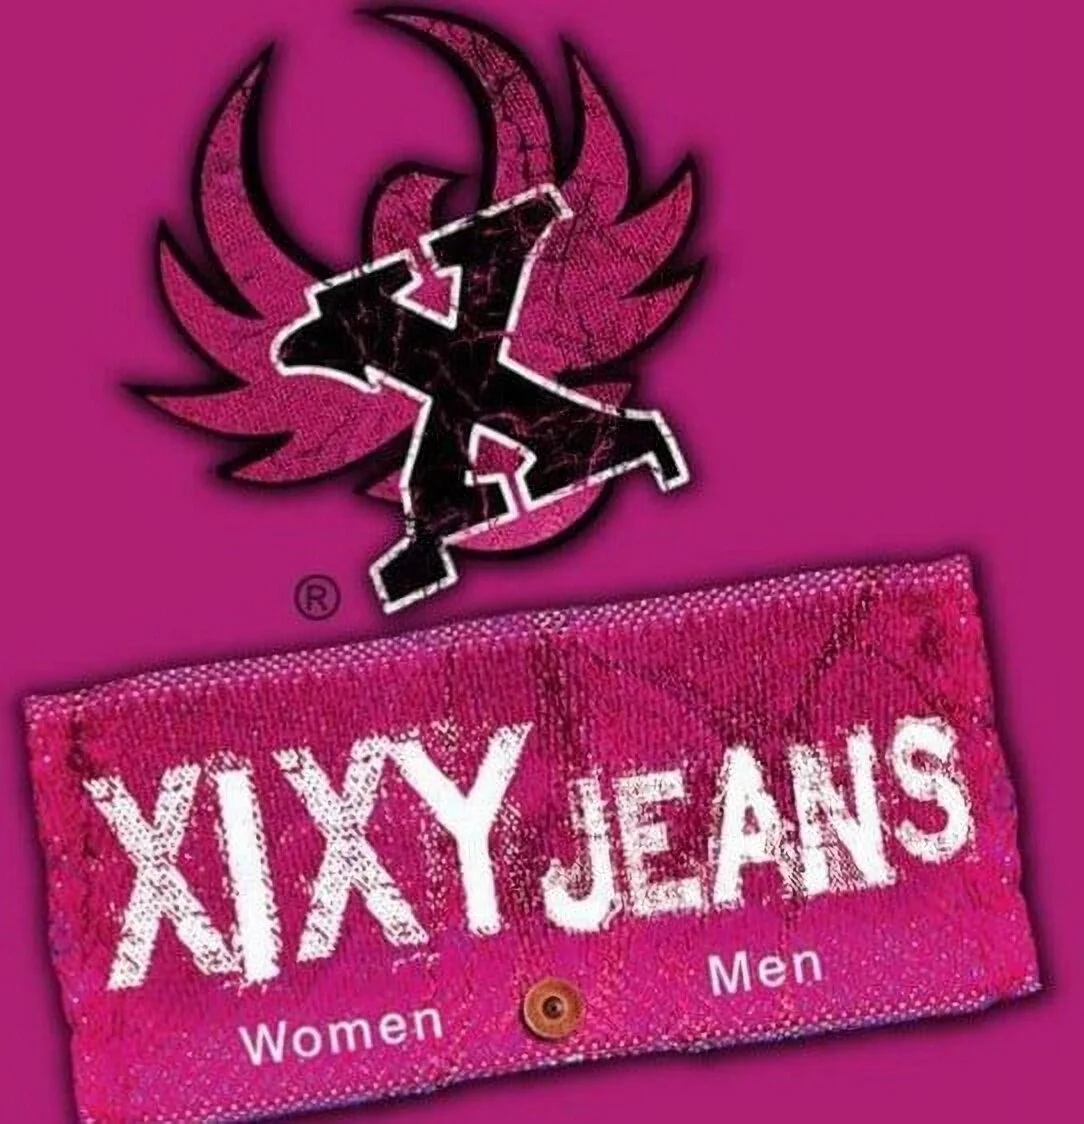 Ropa-xixy-jeans-16158